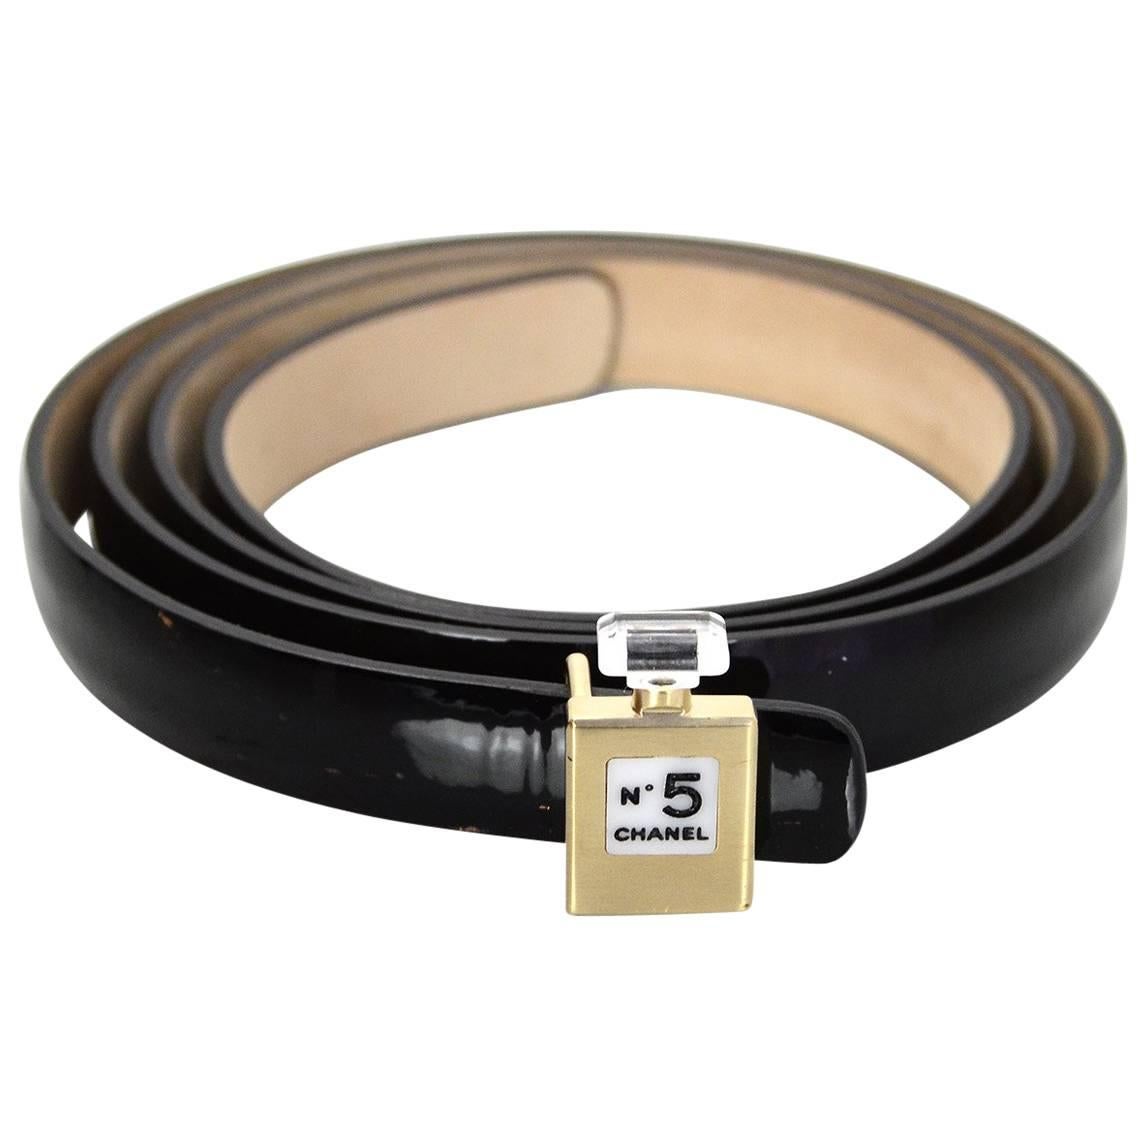 Chanel Black Patent Leather No. 5 Belt sz 36/90